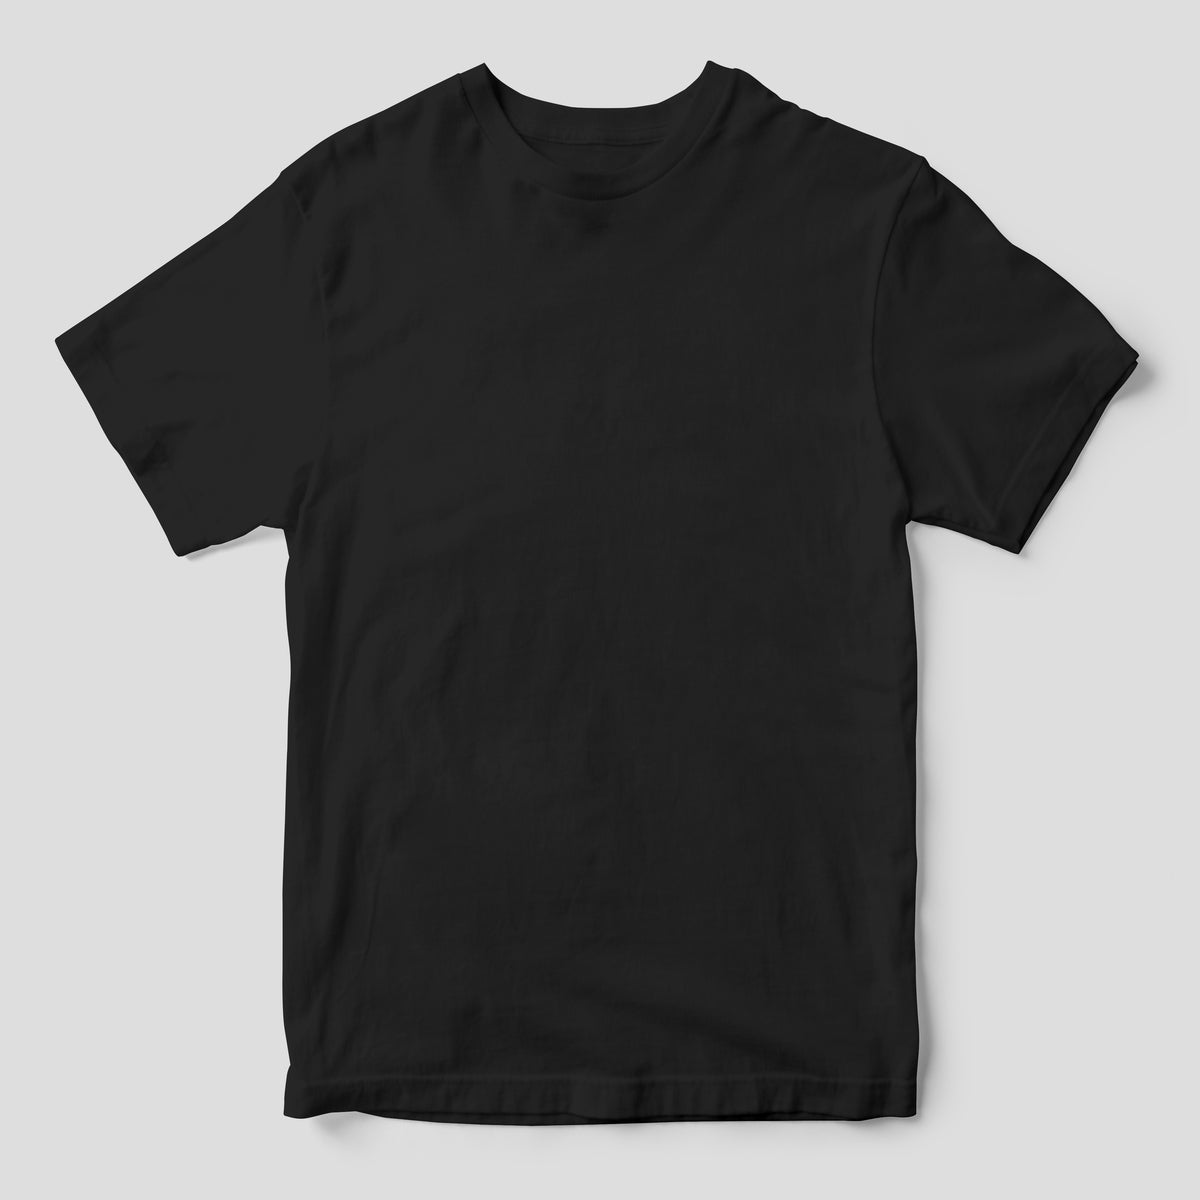 Hug - Back Sided Black T-shirt